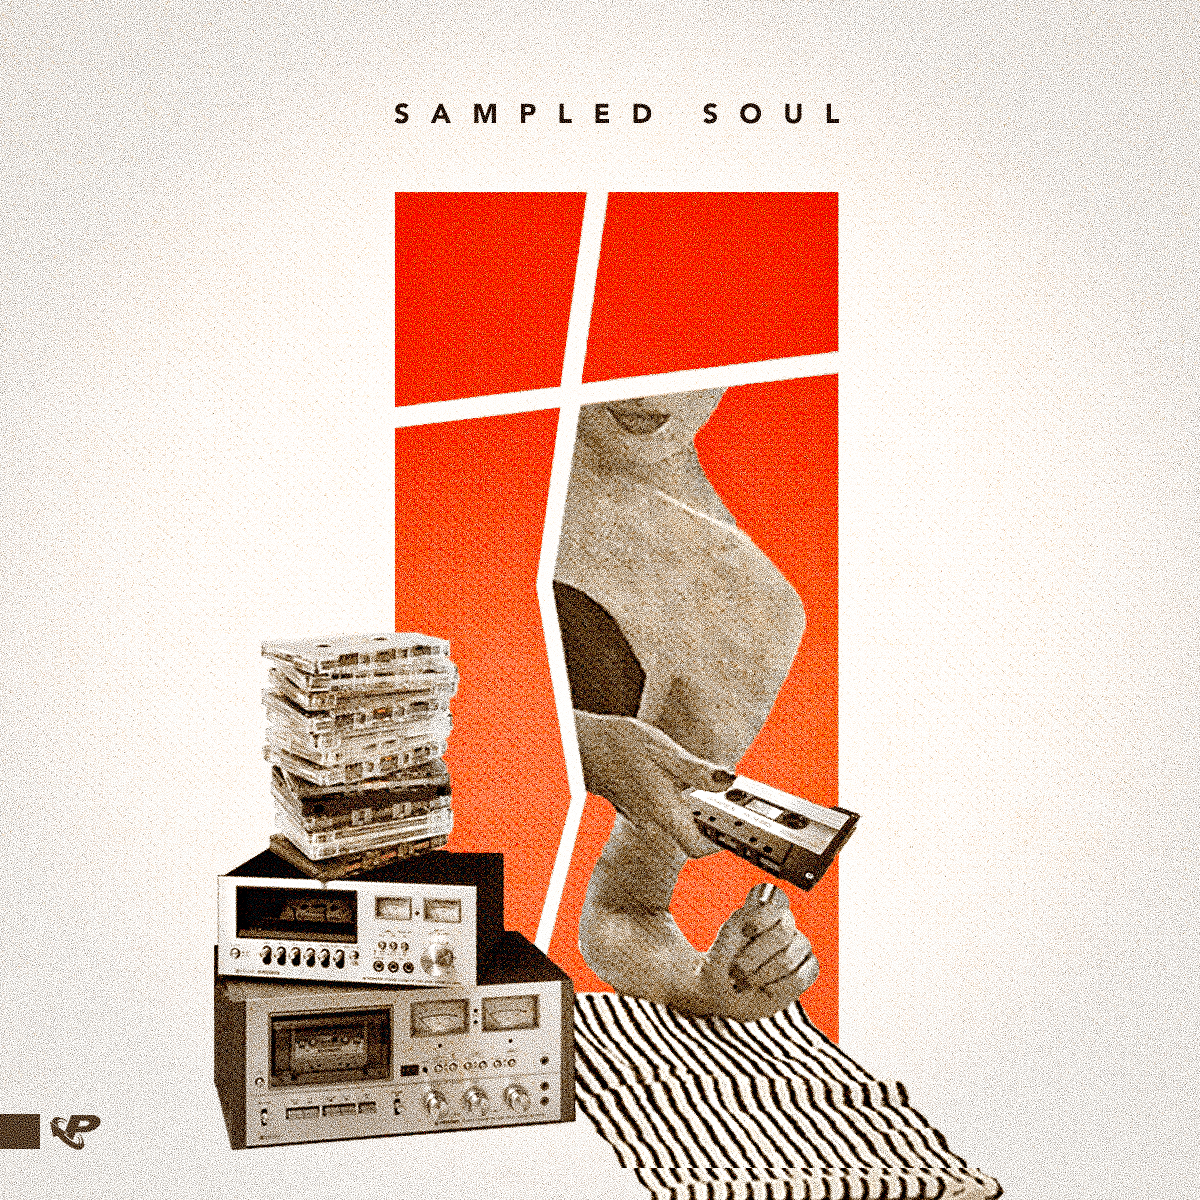 SAMPLED SOUL Chopped Melodies Prime Loops